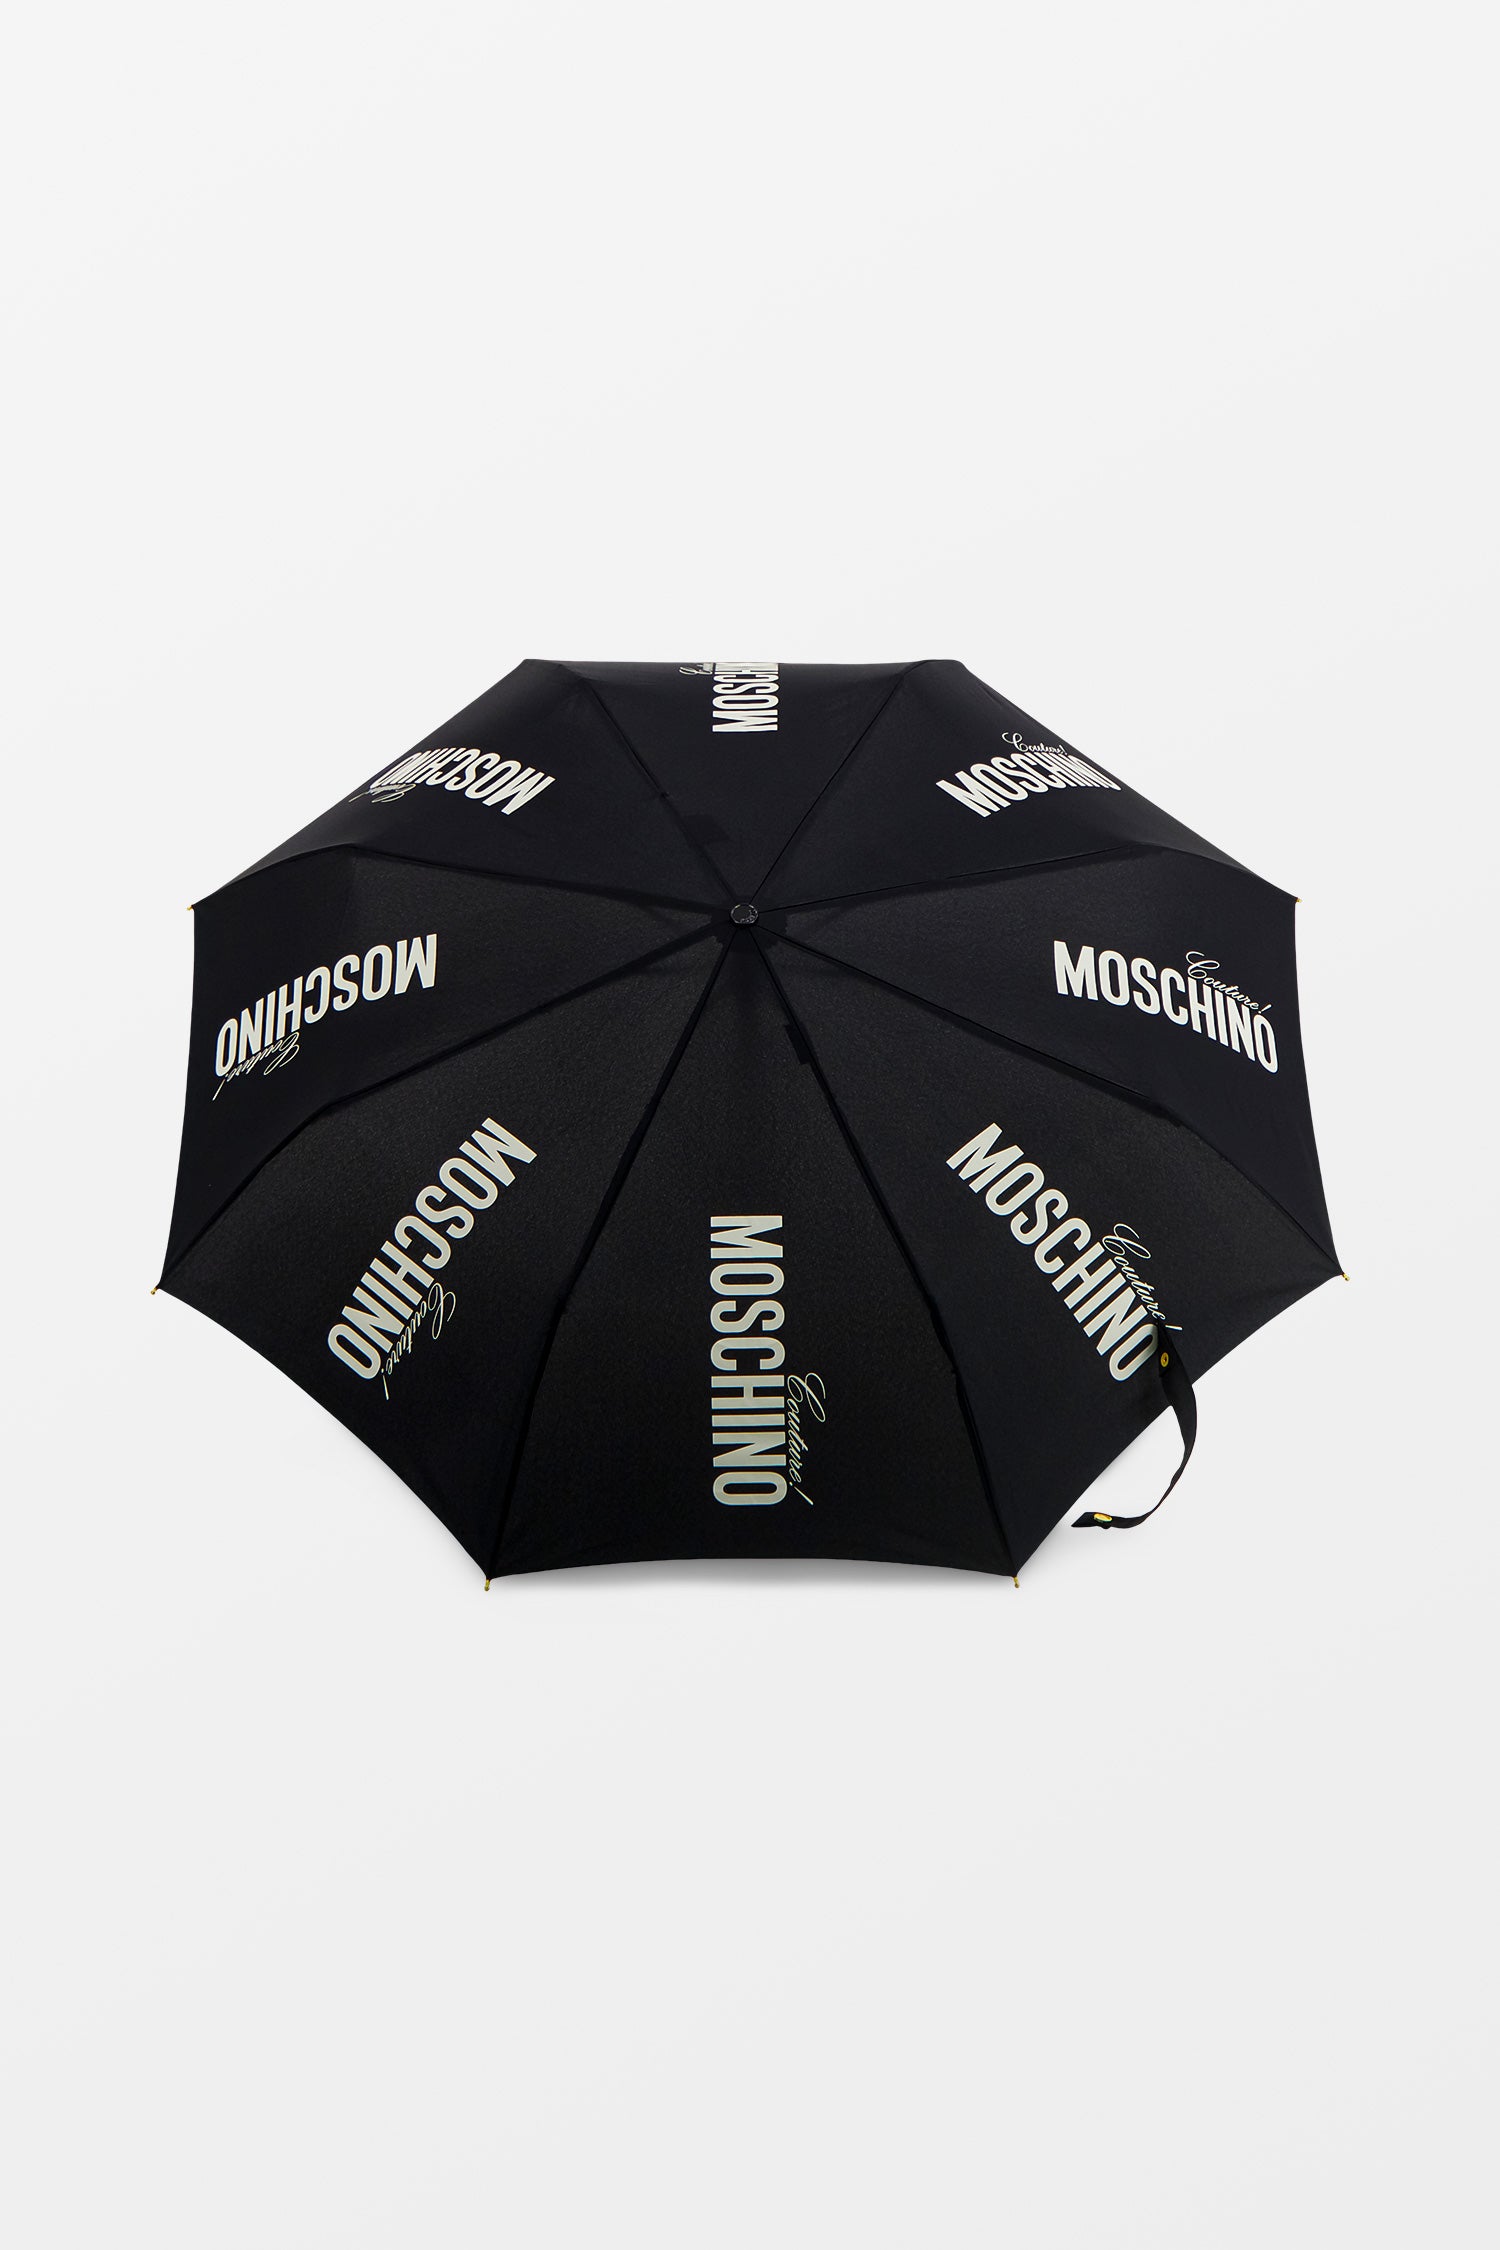 Moschino Couture Black Umbrella